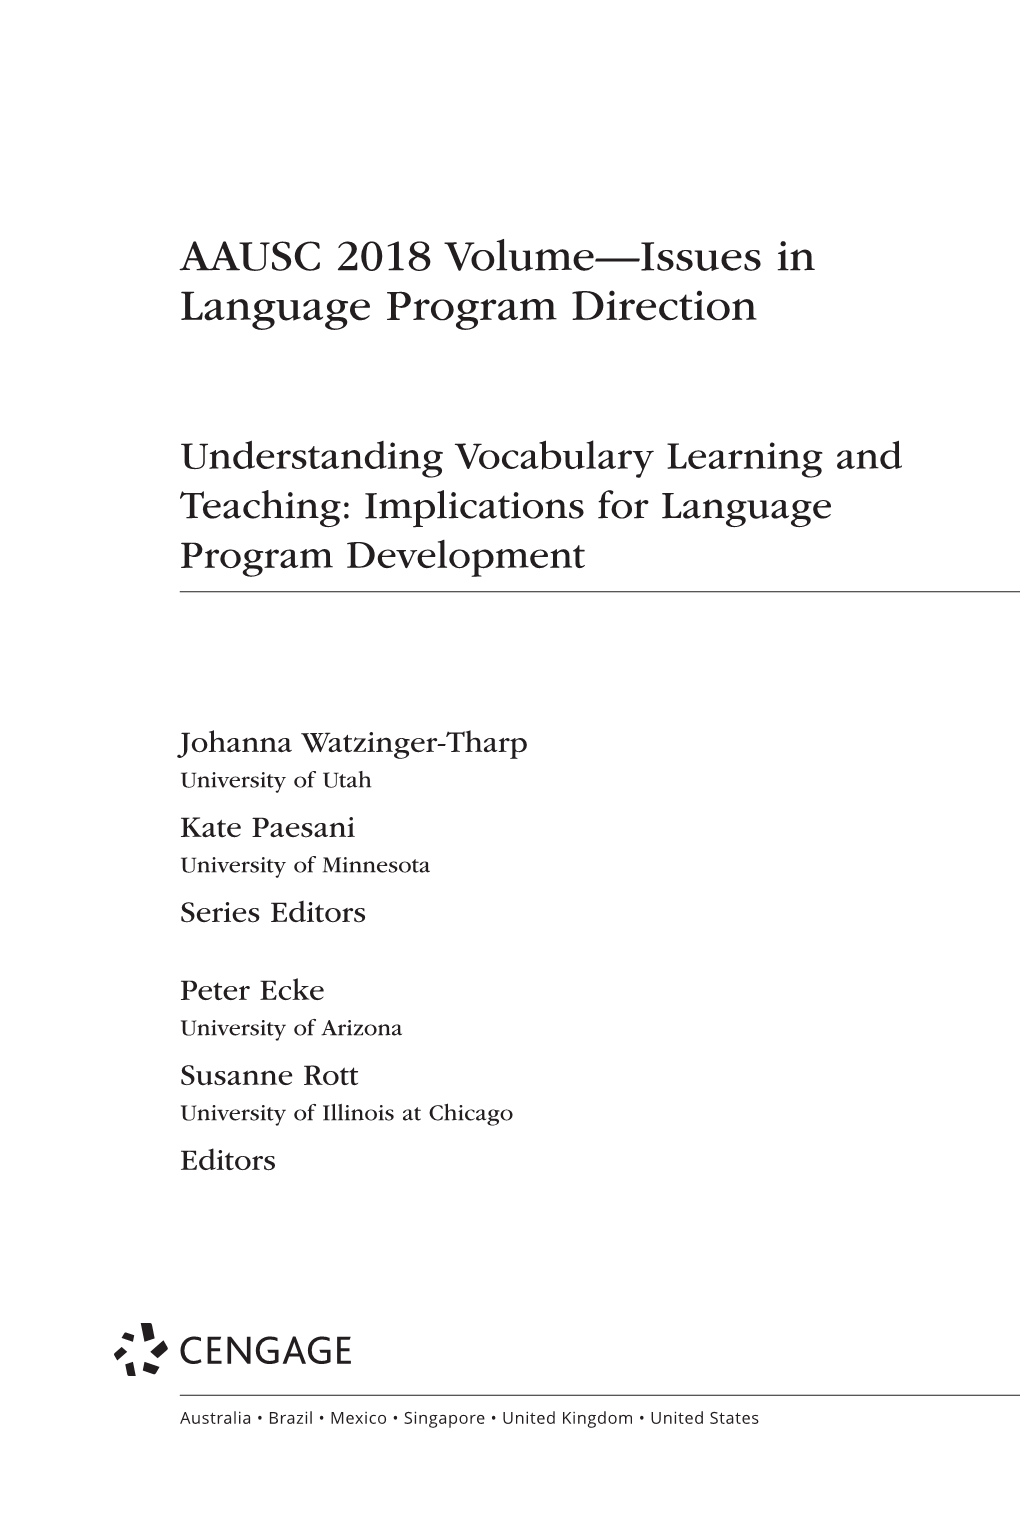 Semantic Development and L2 Vocabulary Teaching